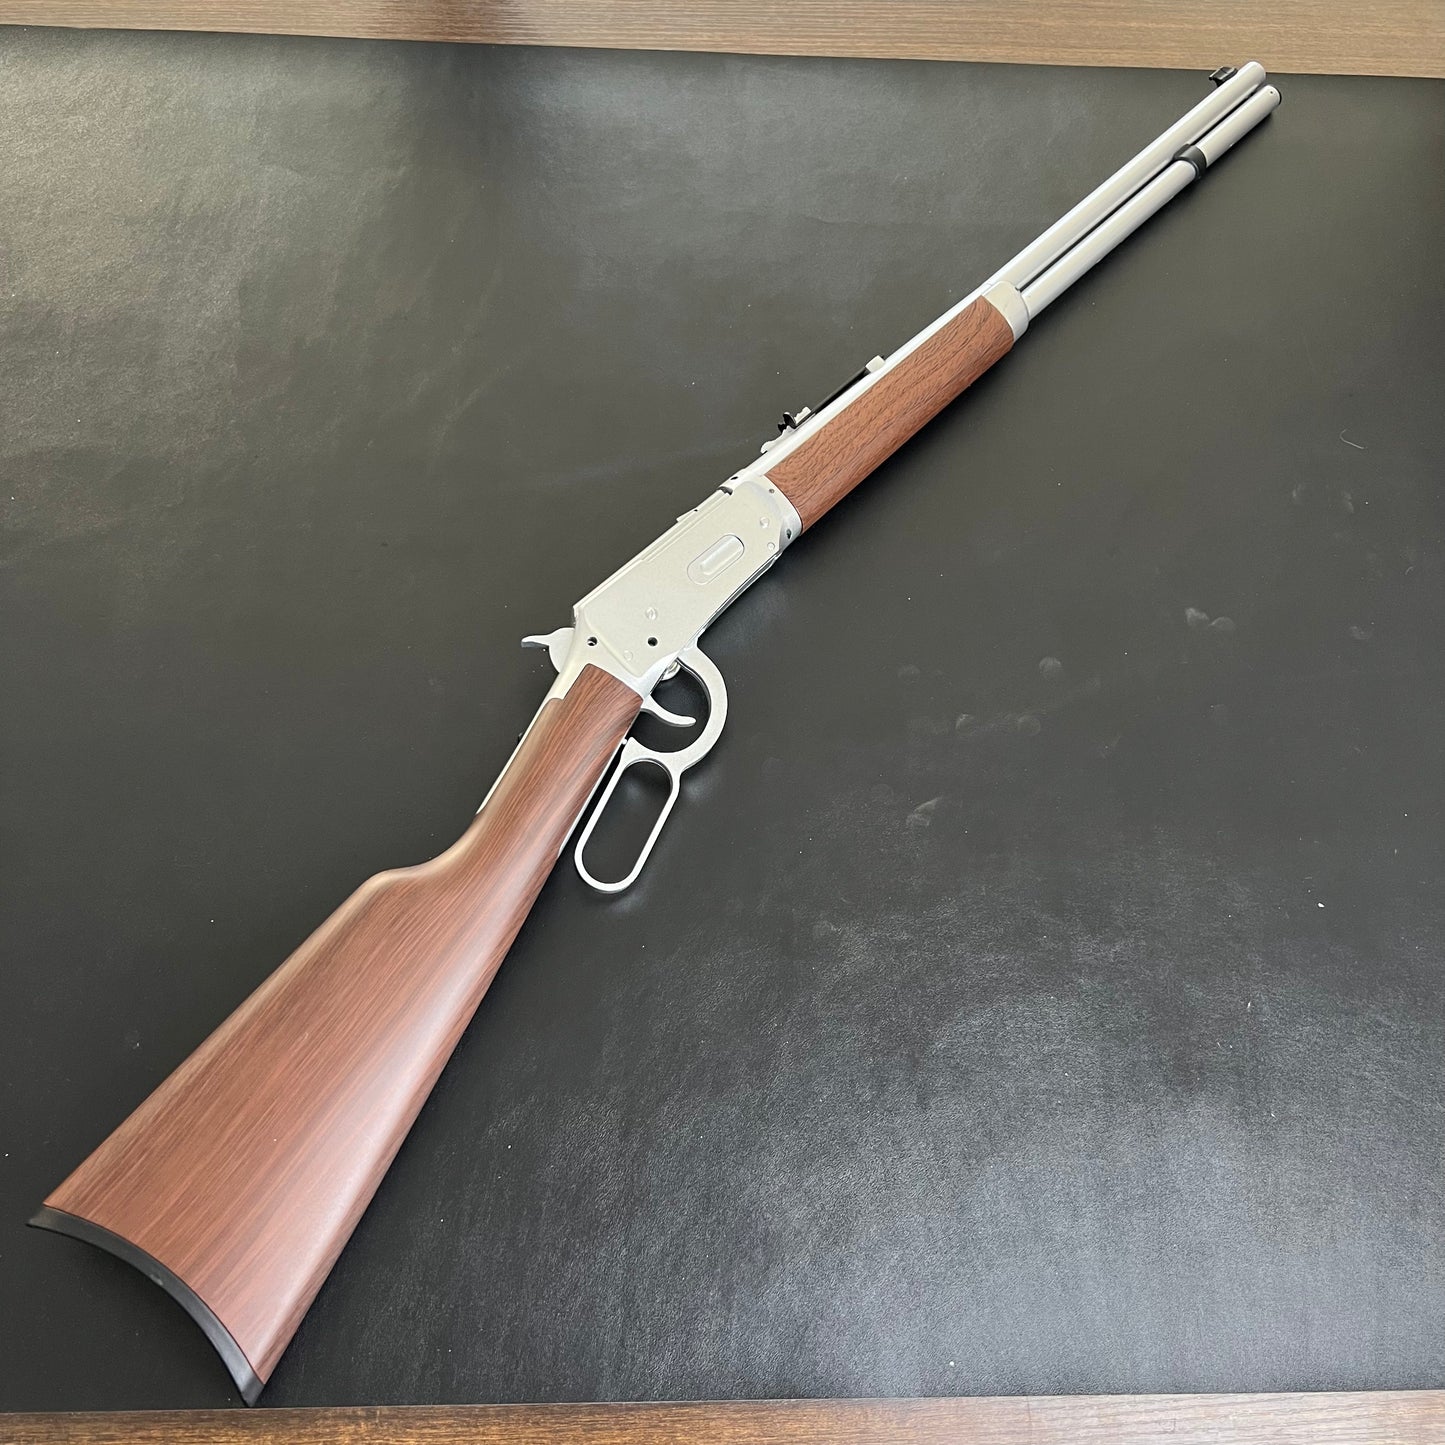 Winchester M1894 Foam Blaster